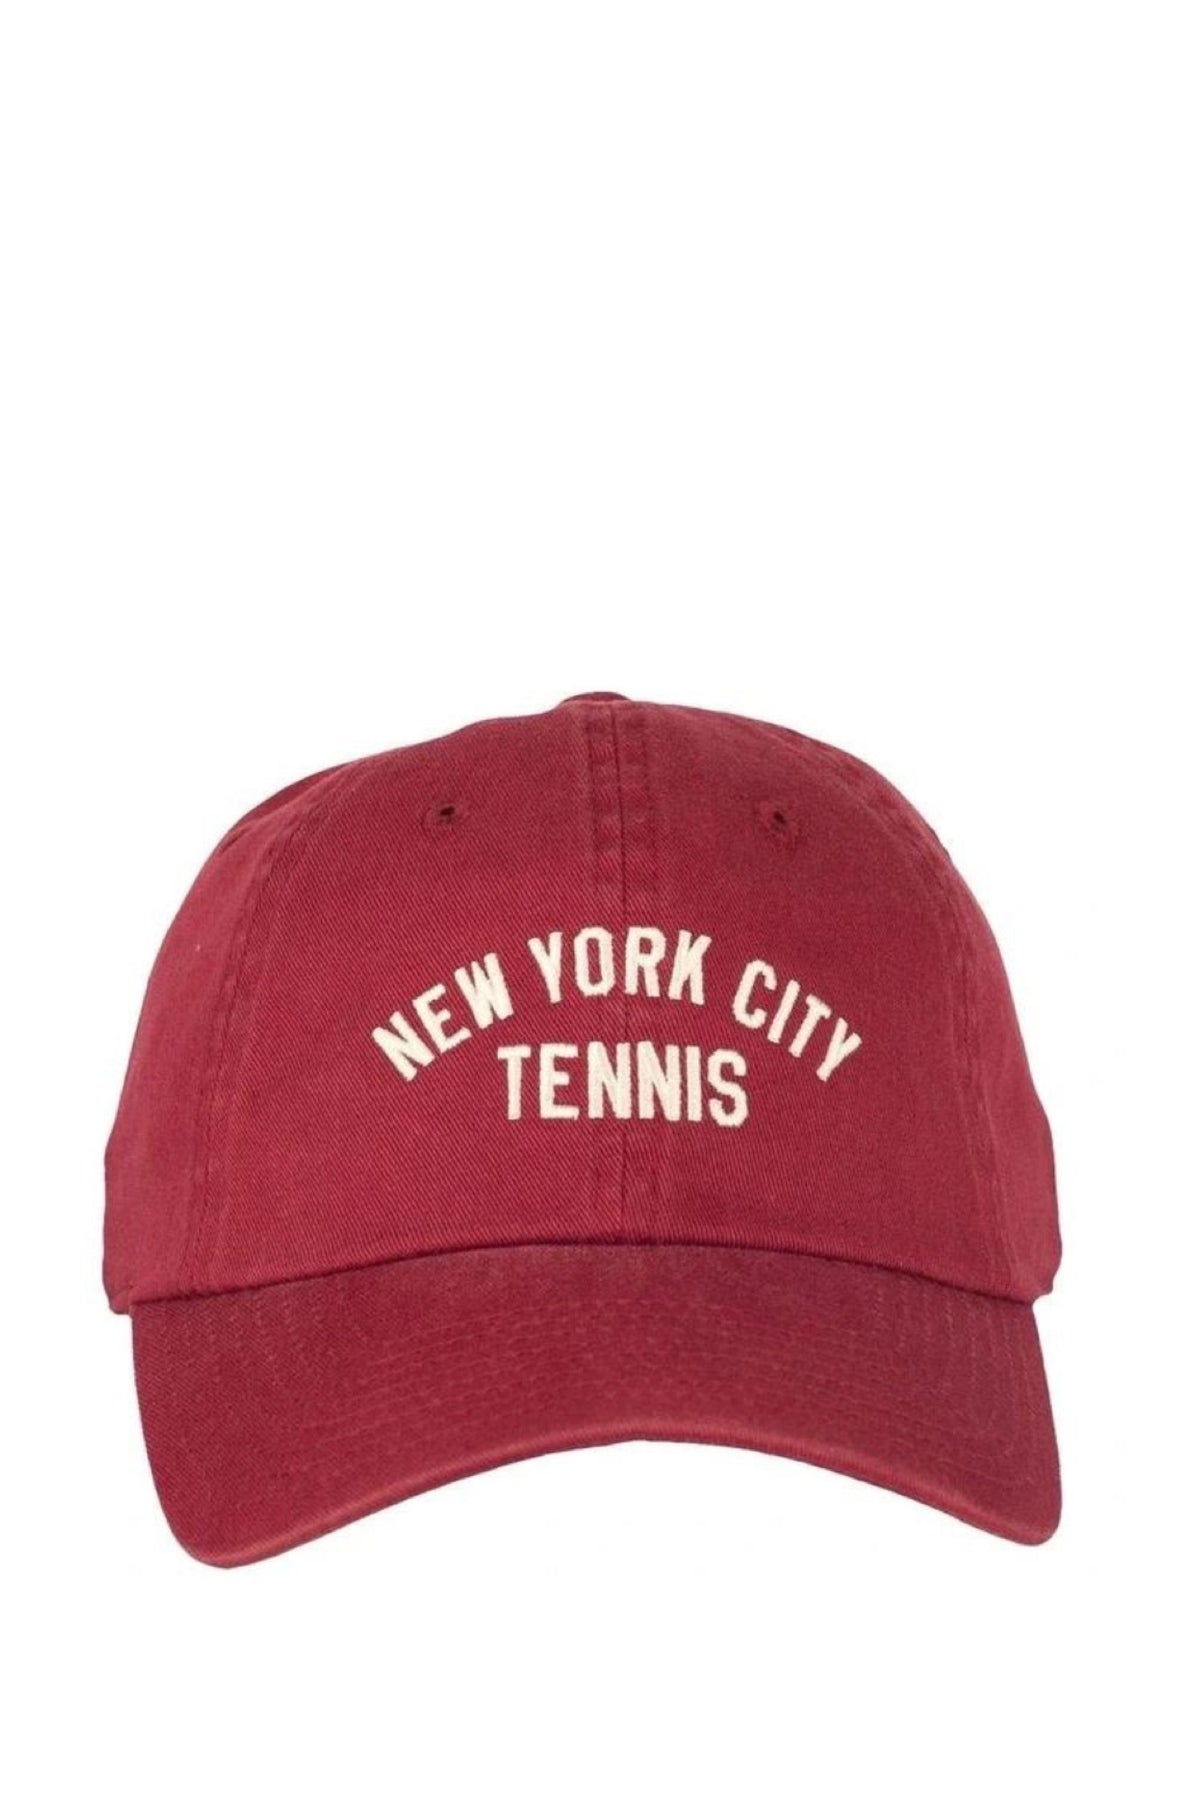 New York City Ball Park Cap Red